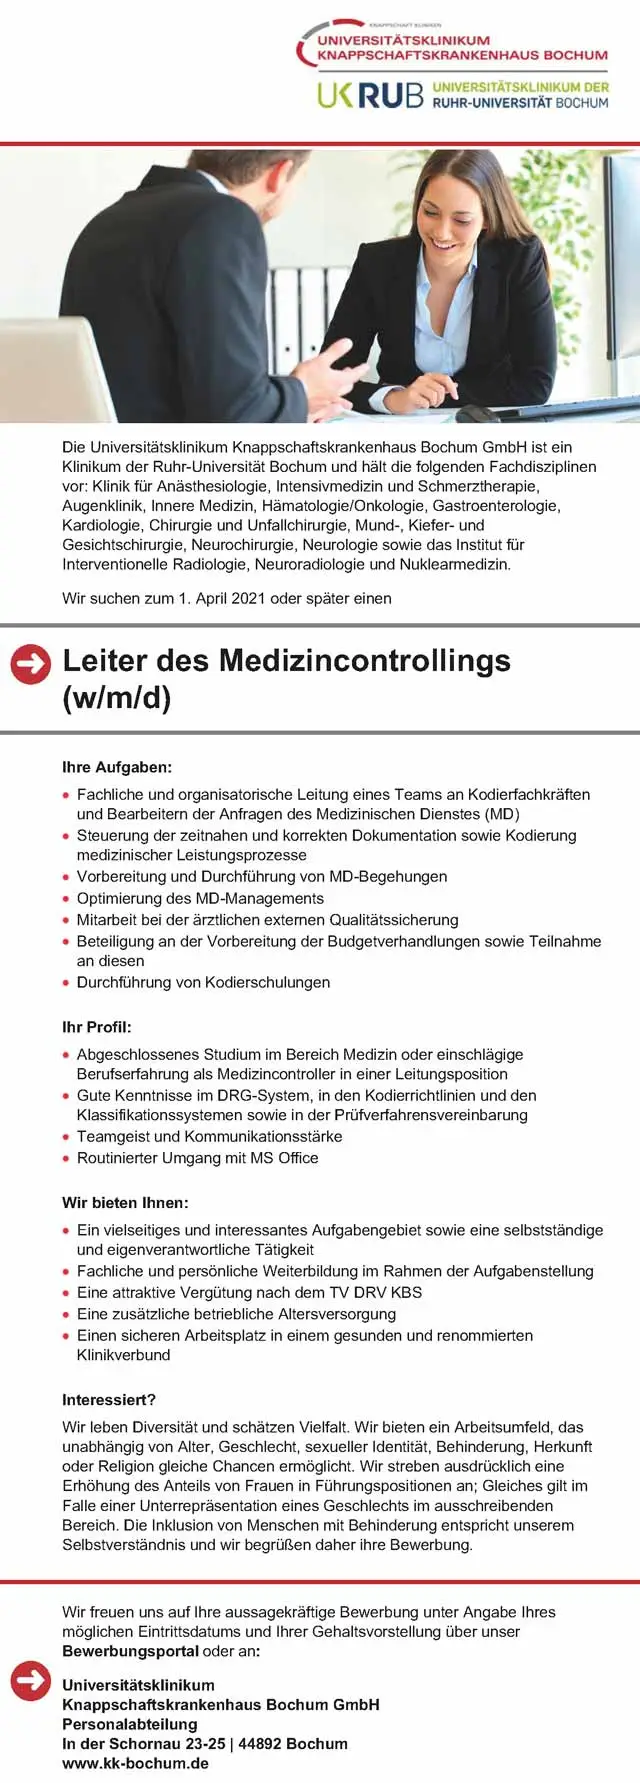 Universitätsklinikum Knappschaftskrankenhaus Bochum GmbH: Leiter des Medizincontrollings (w/m/d)